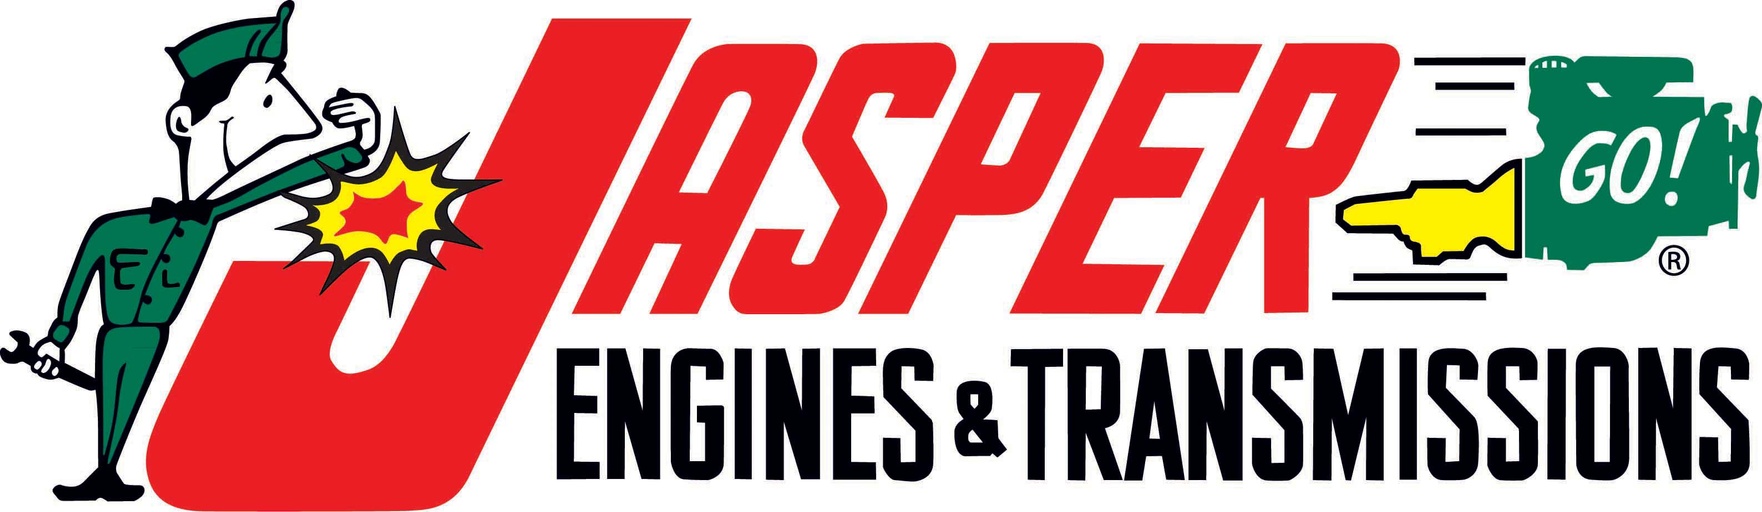 Jasper Engines and Transmission